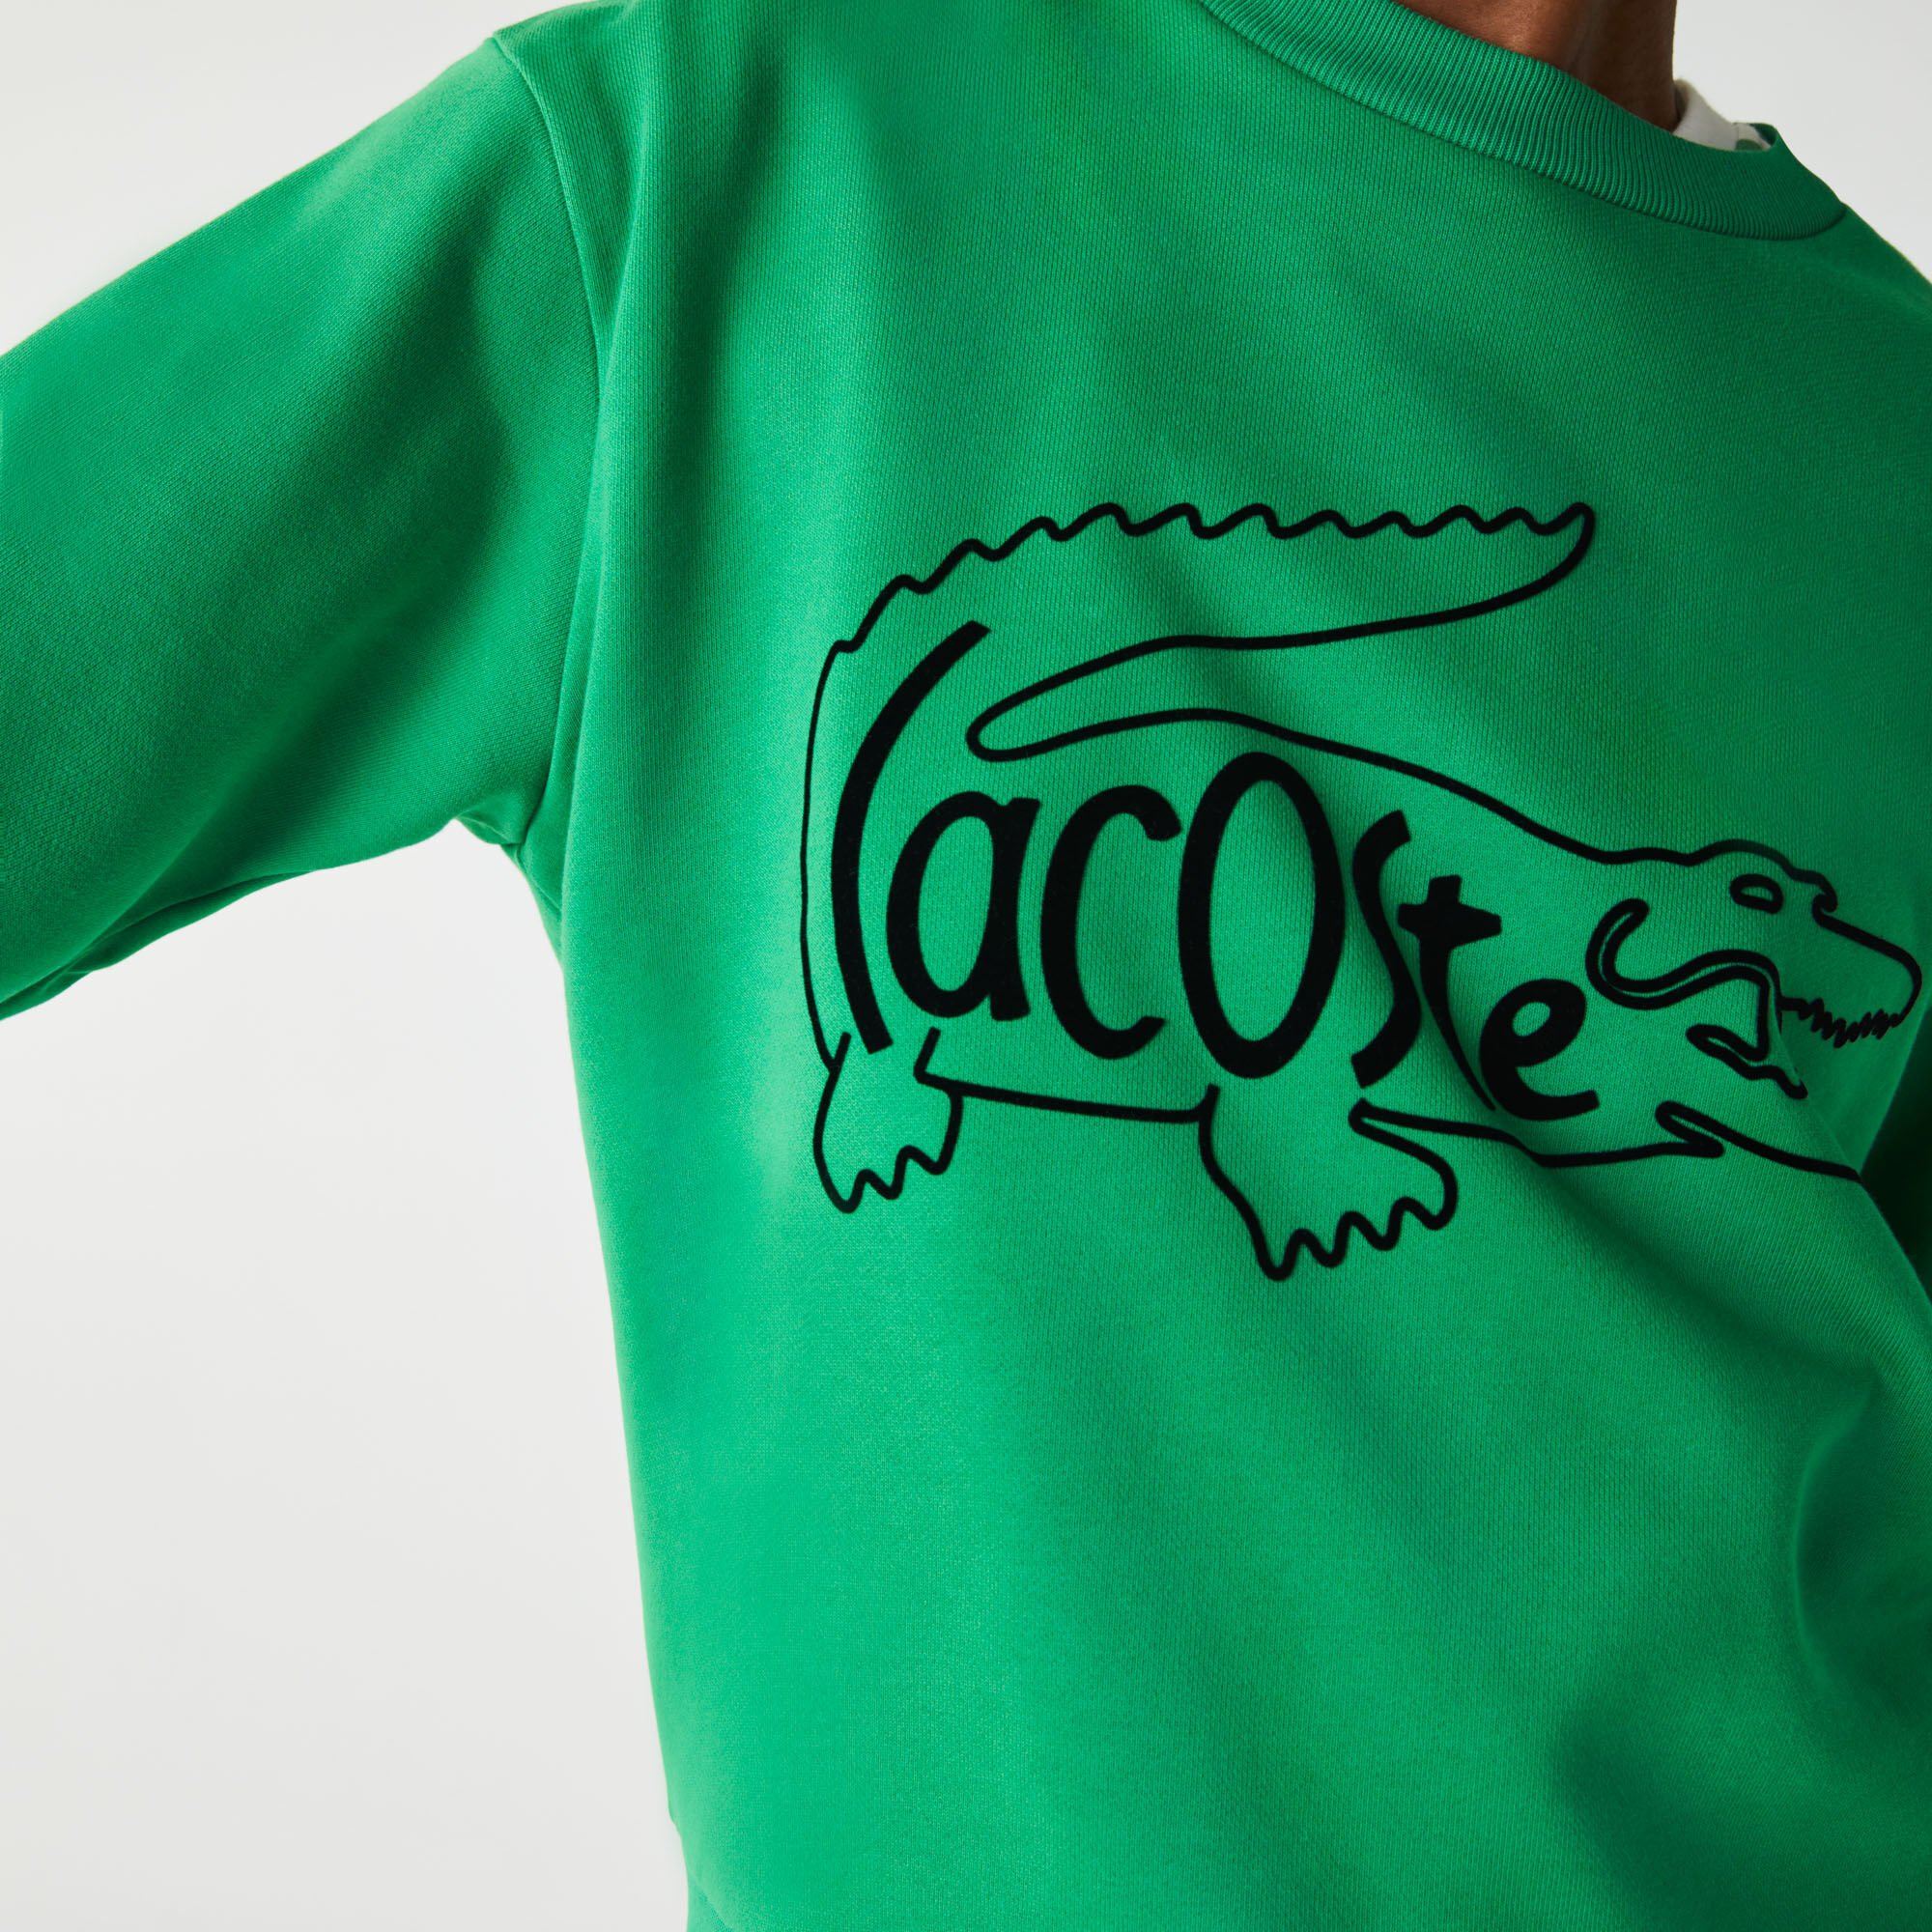 Women’s Crew Neck Crocodile Print Cotton Fleece Sweatshirt